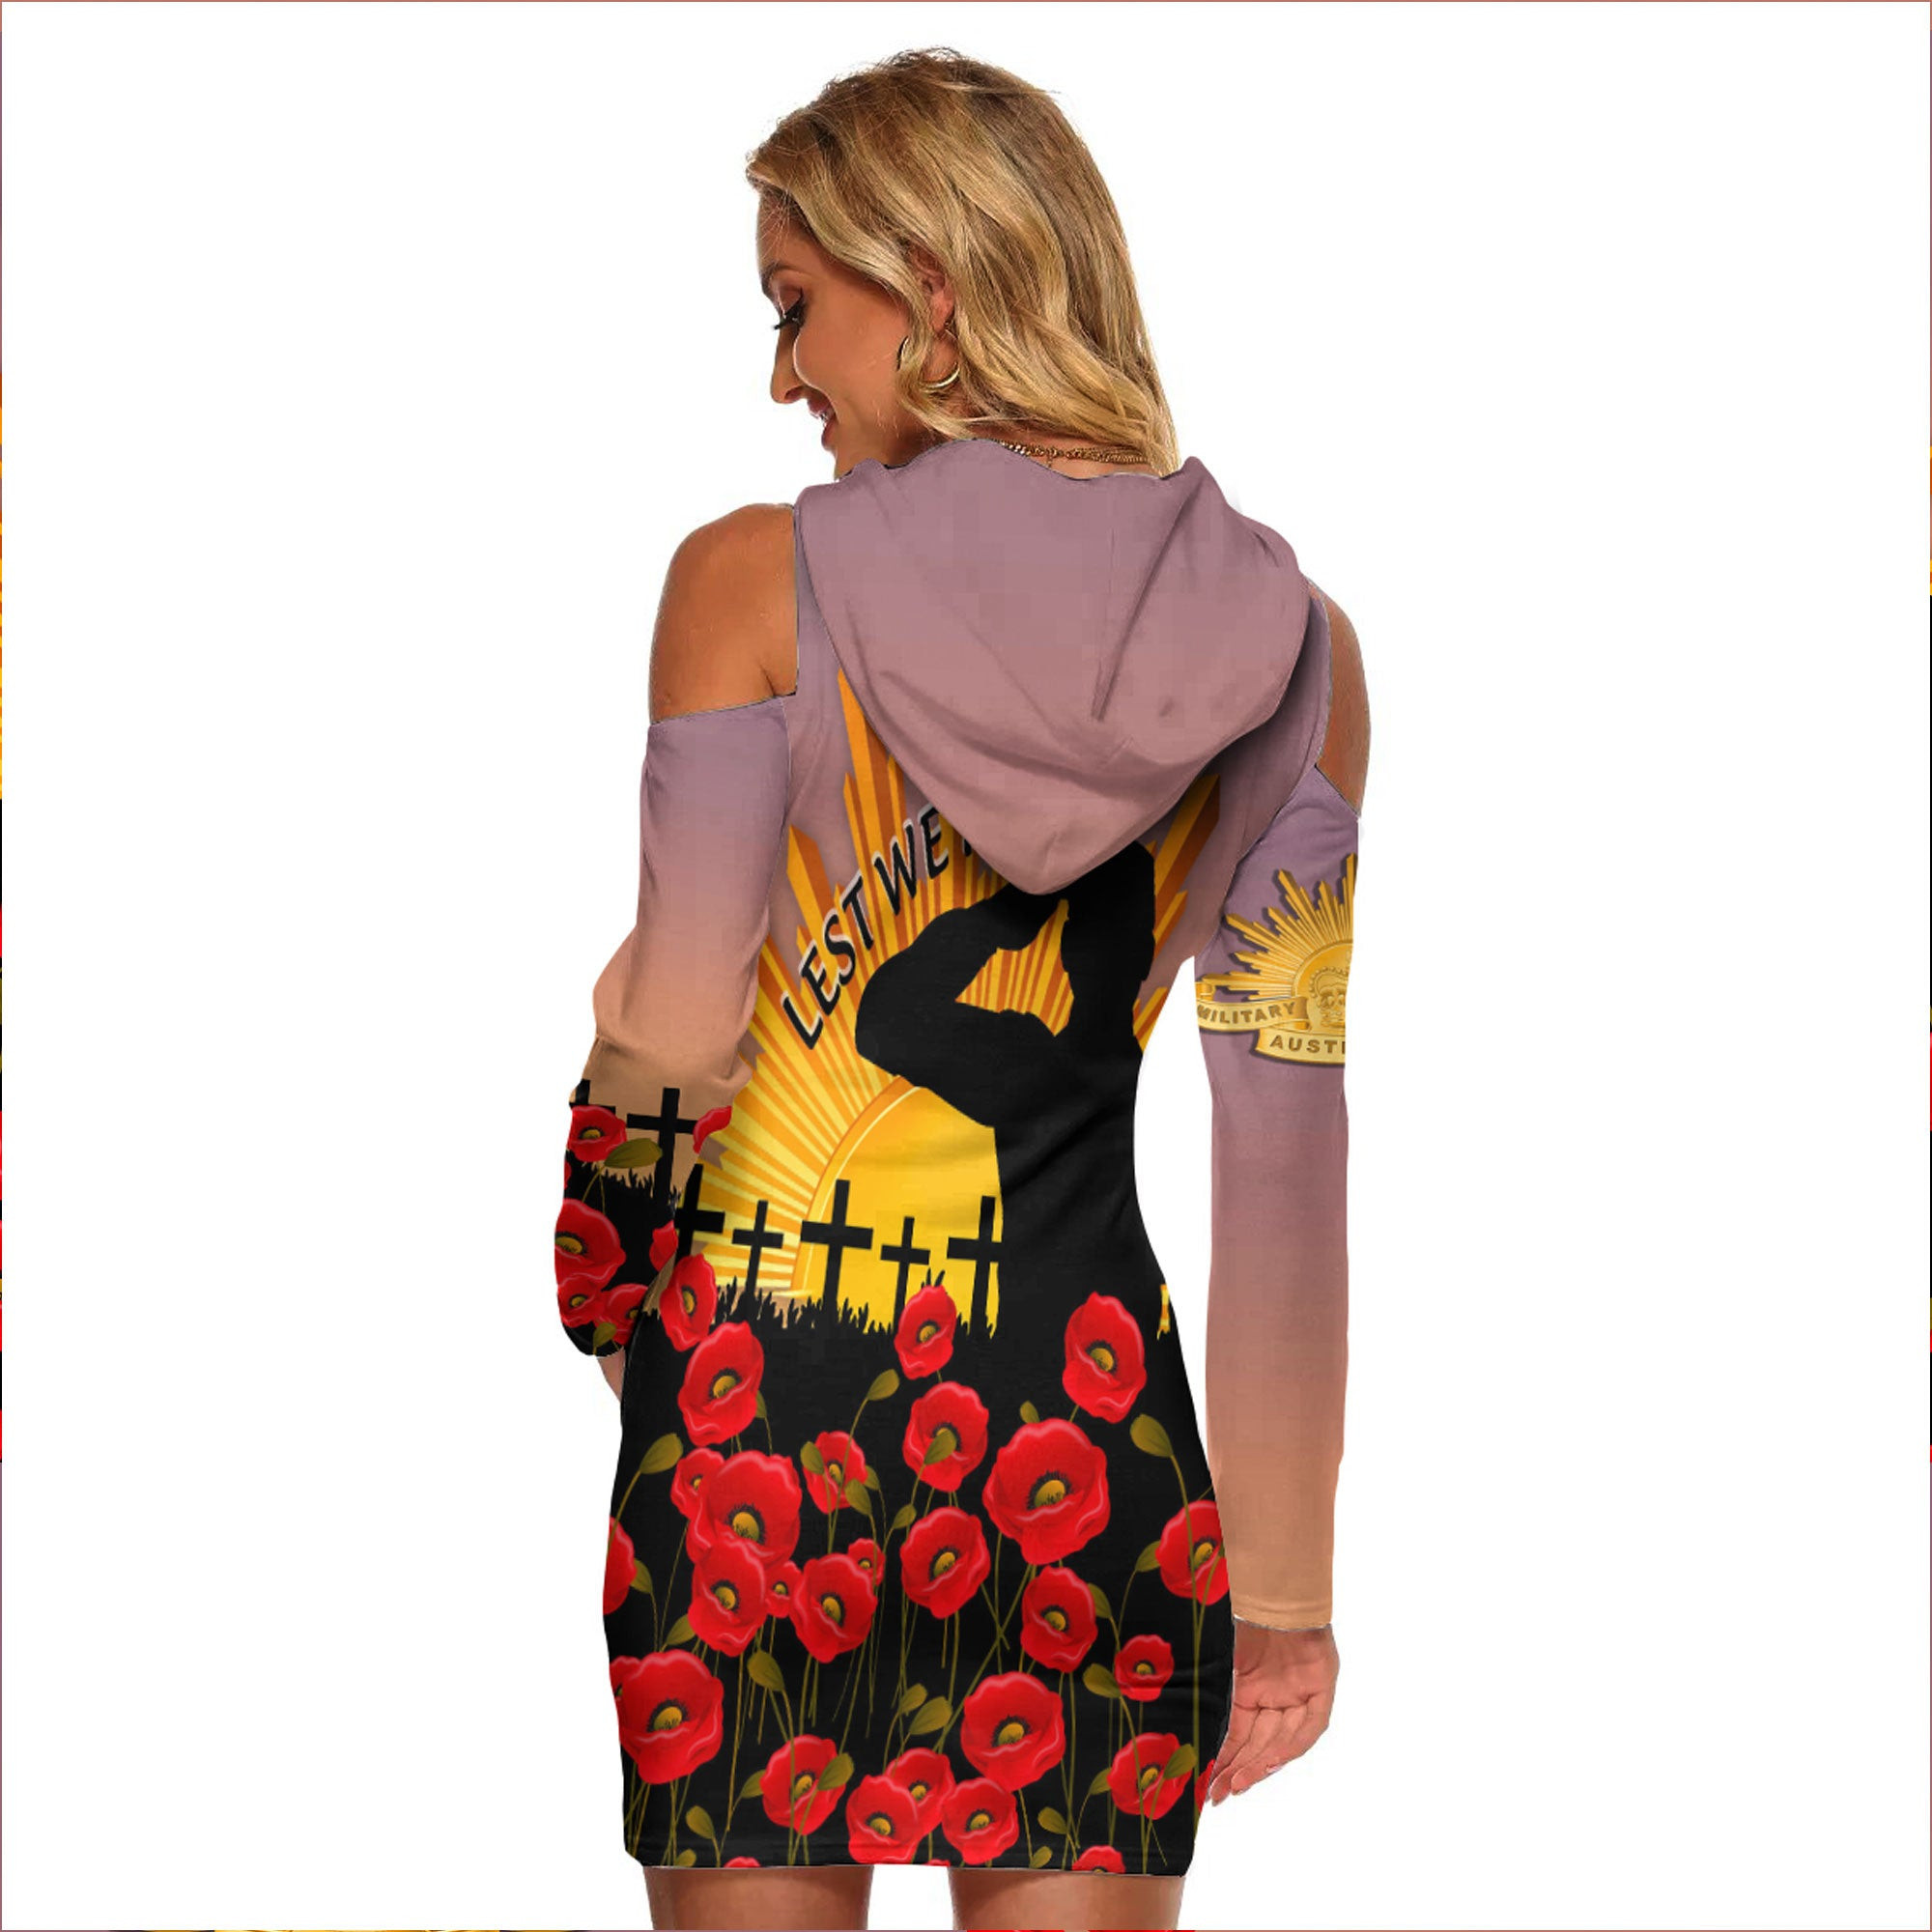 lovenewzealand Clothing - Anzac Day Poppy -  Women's Tight Dress A95 | lovenewzealand